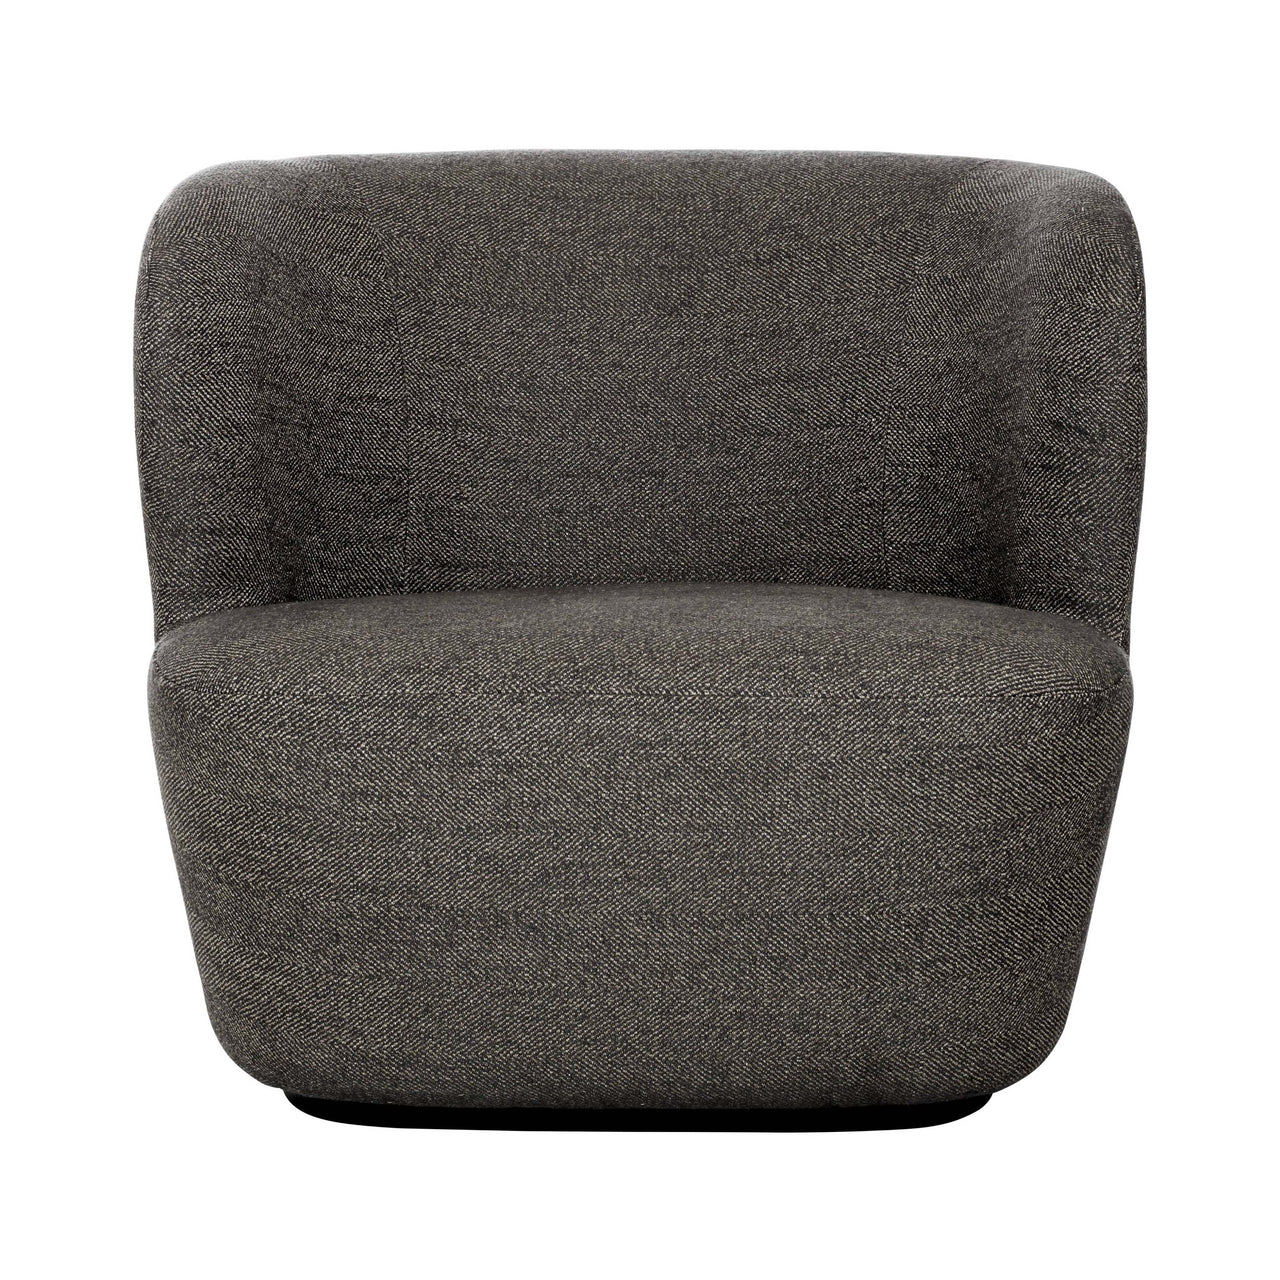 Stay Lounge Chair: Large + Black + Laibero 